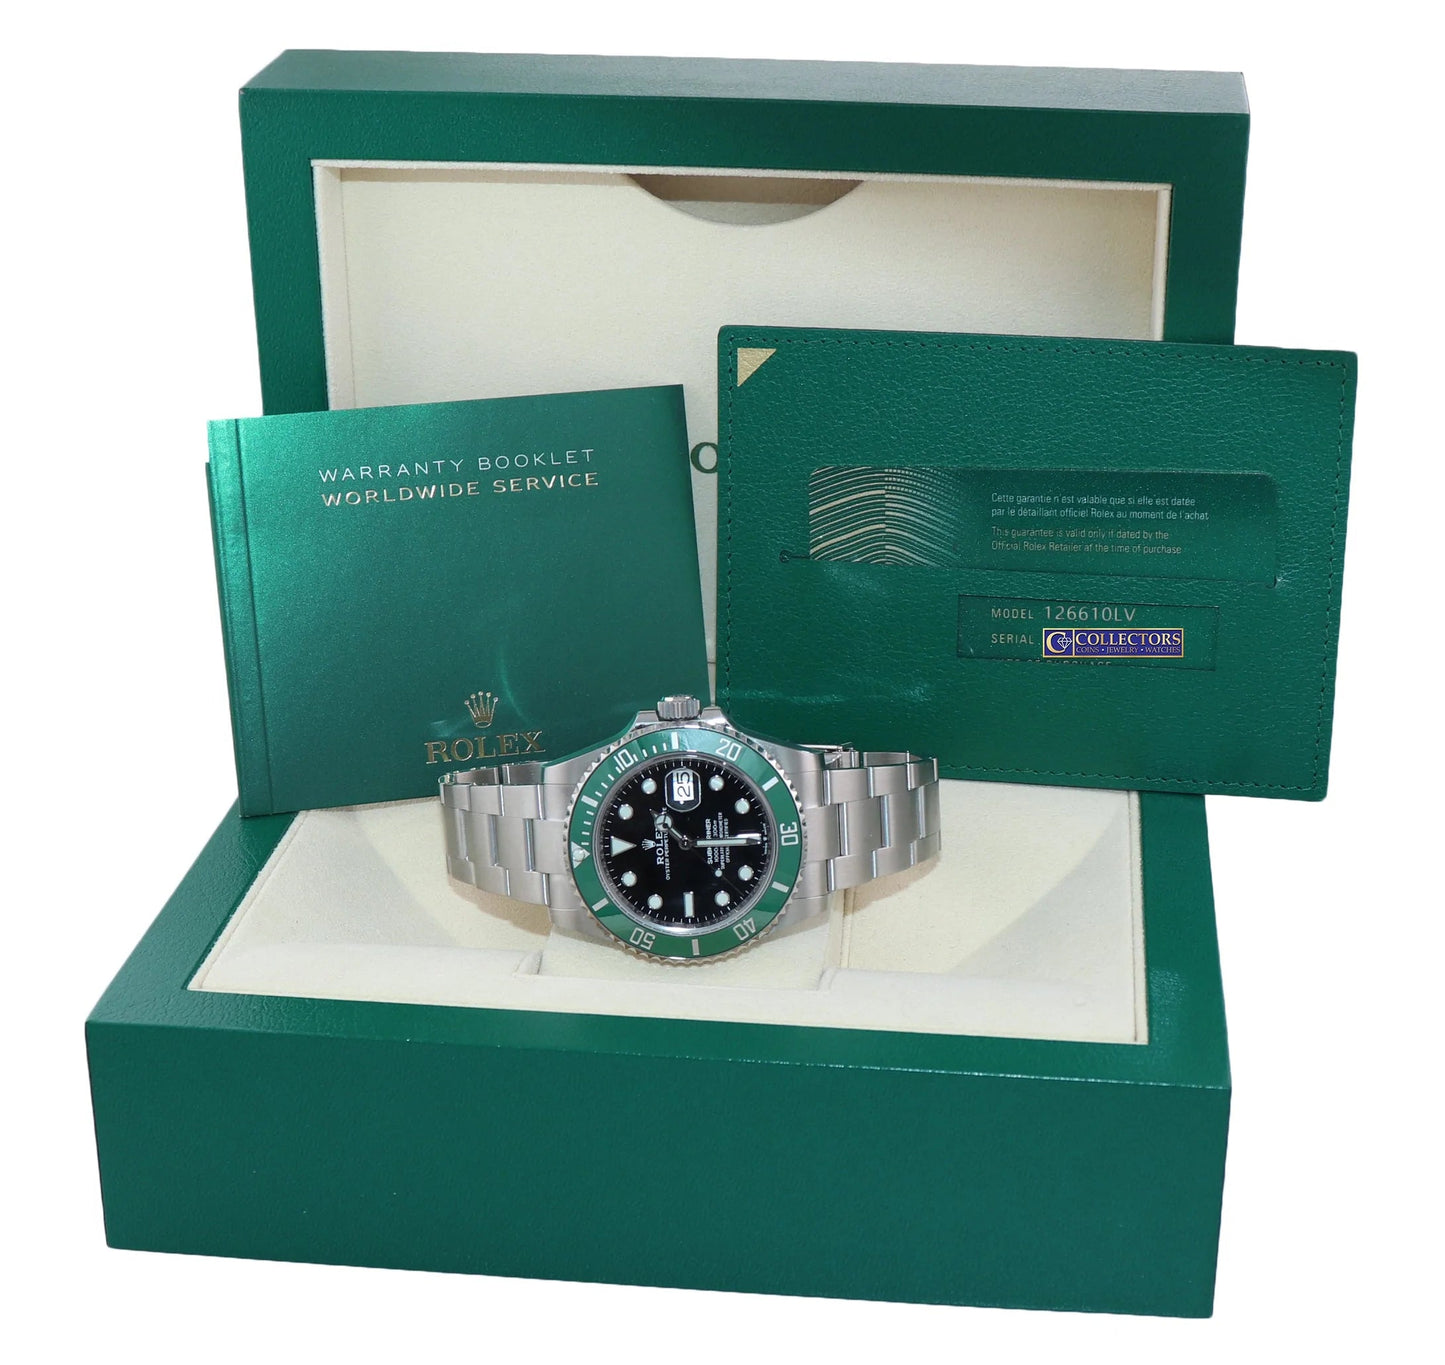 2022 BRAND NEW Rolex Submariner 41mm GREEN KERMIT Ceramic 126610LV Watch Box